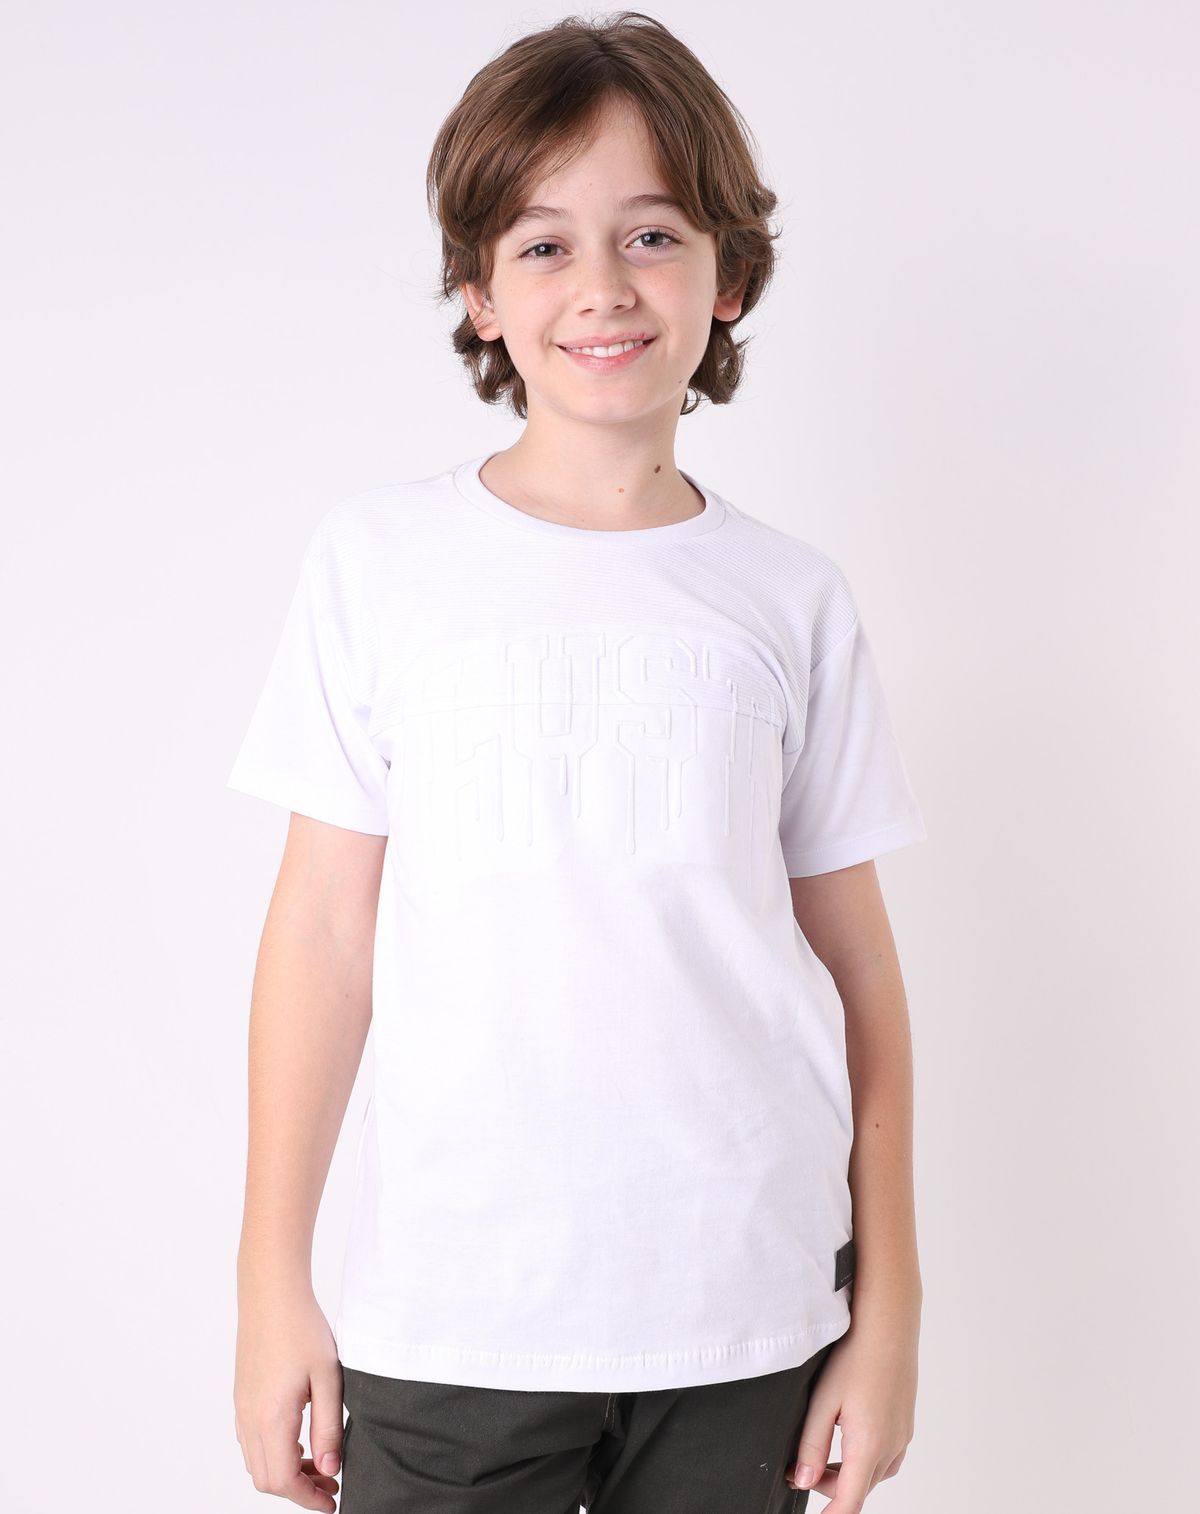 Camiseta Manga Curta Juvenil Menino Relevo branco - 10